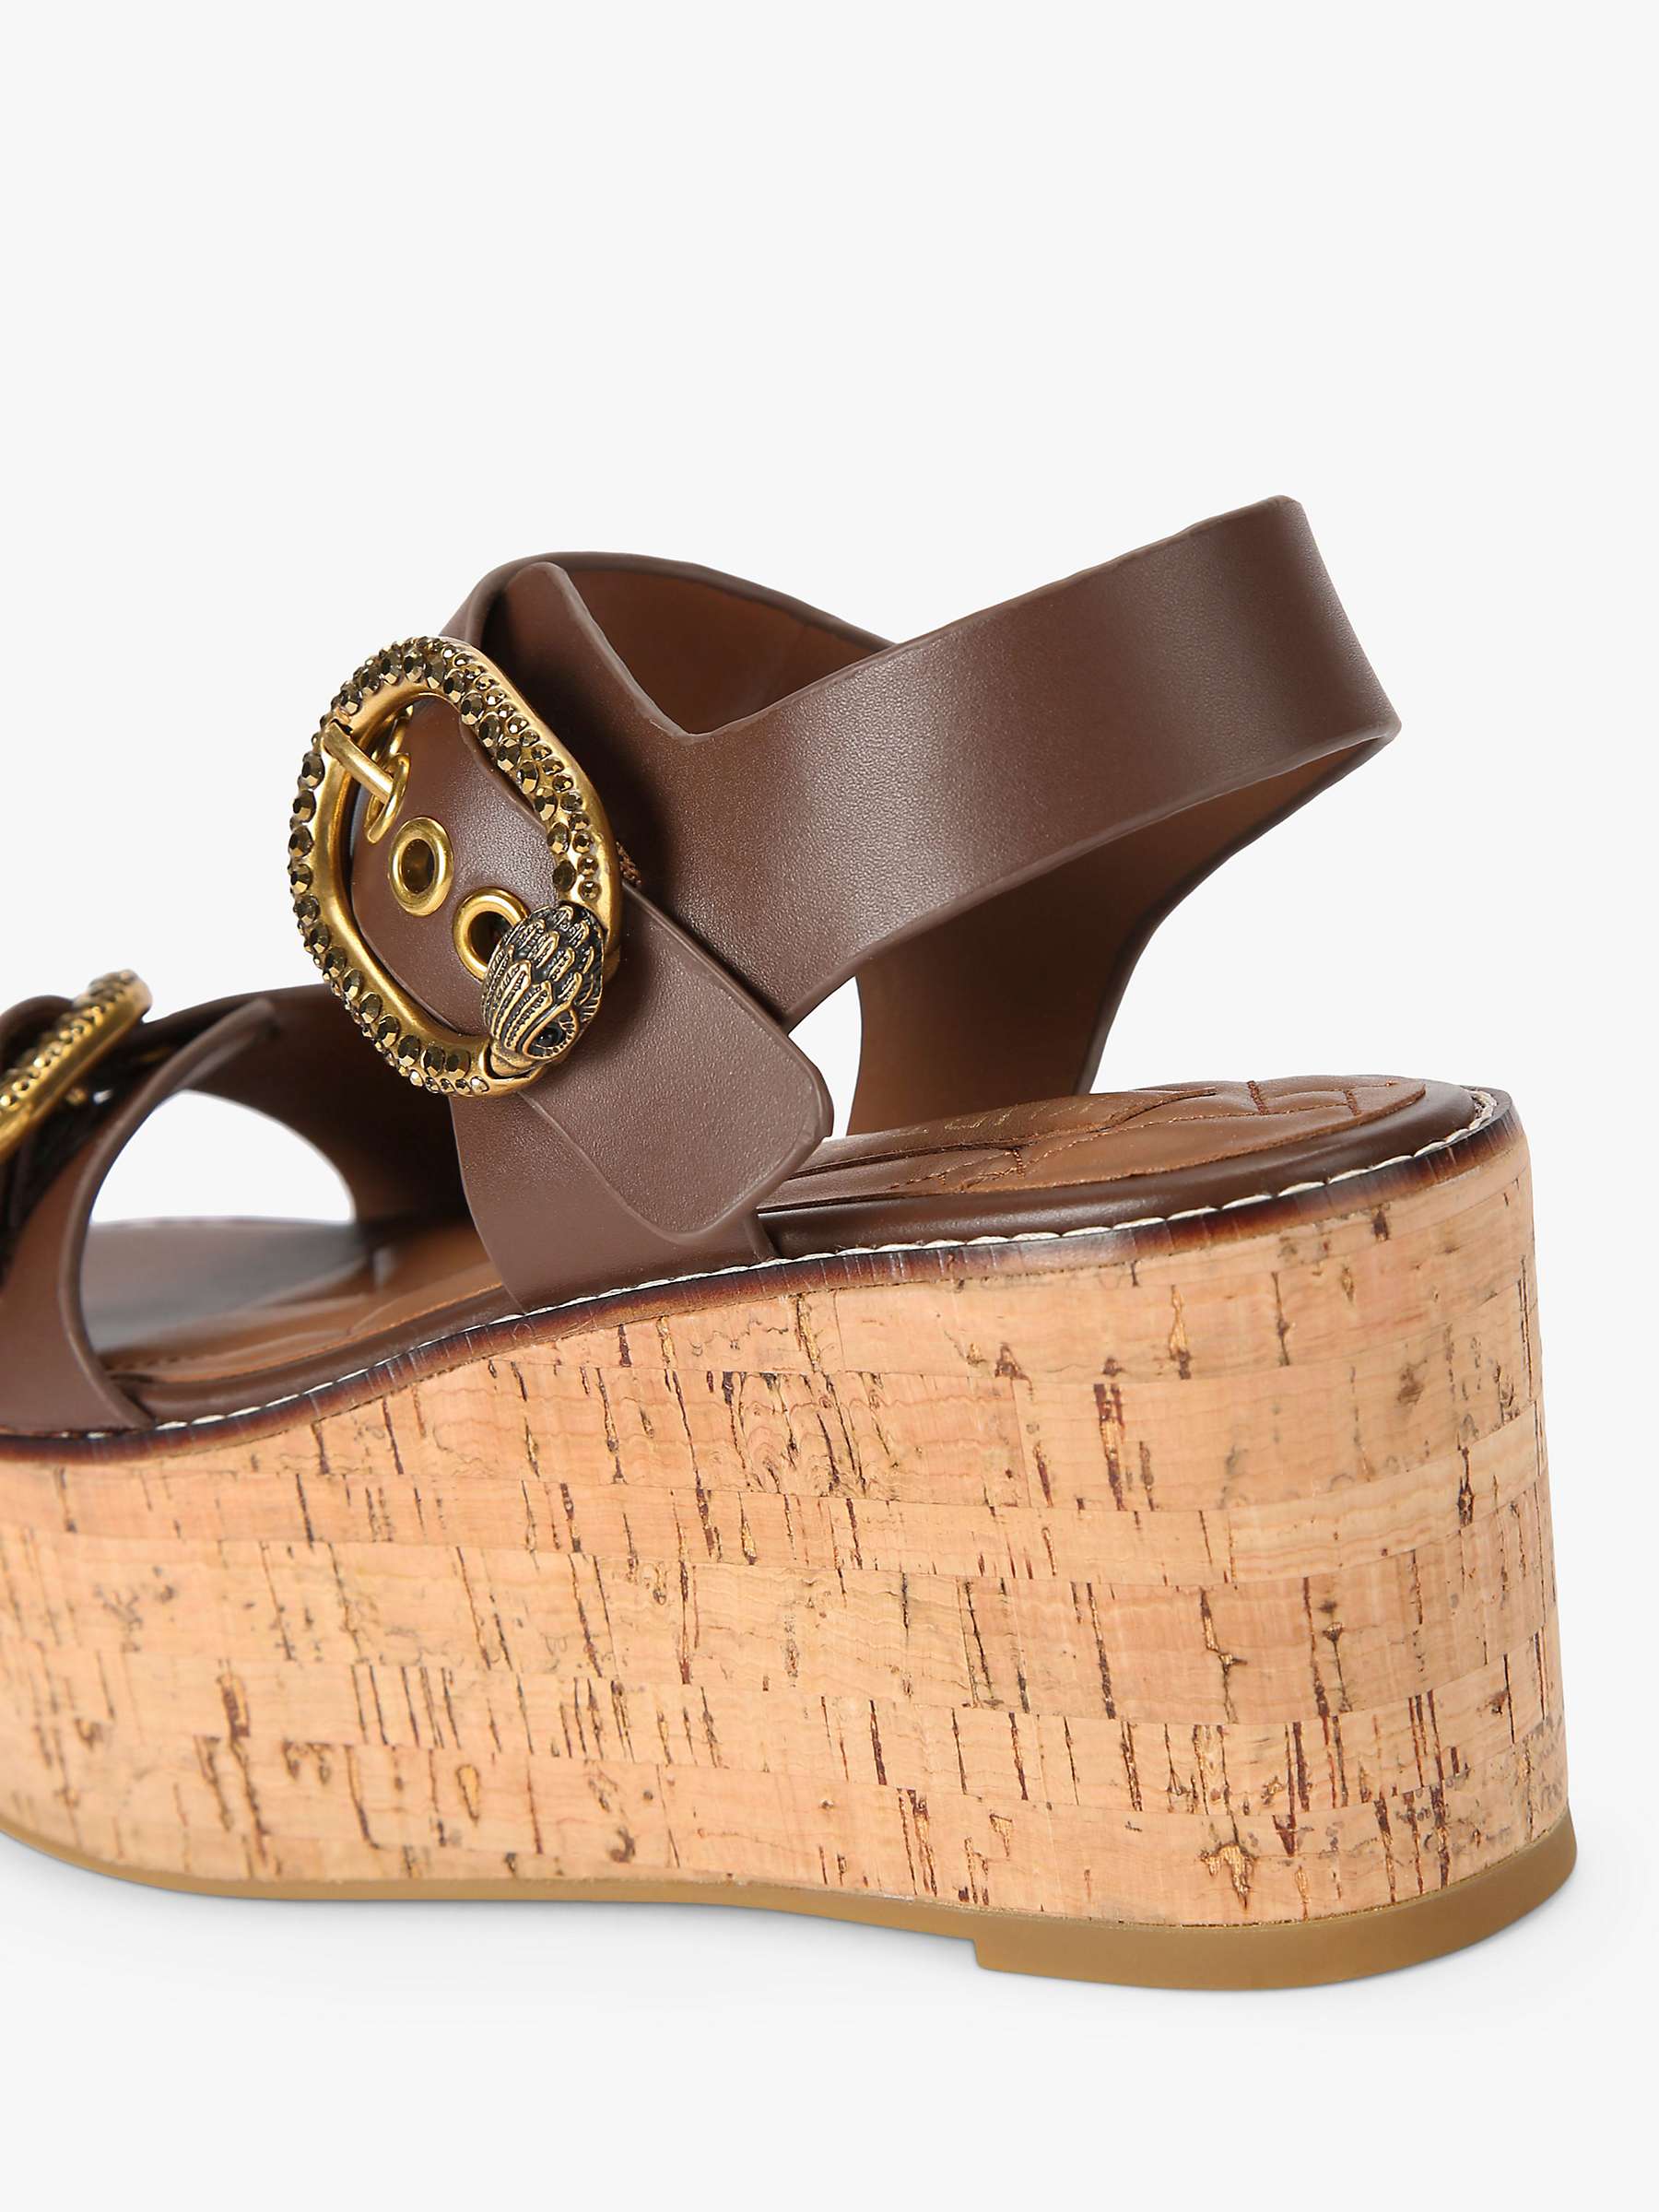 Buy Kurt Geiger London Mayfair Leather Flatform Sandals, Brown Tan Online at johnlewis.com